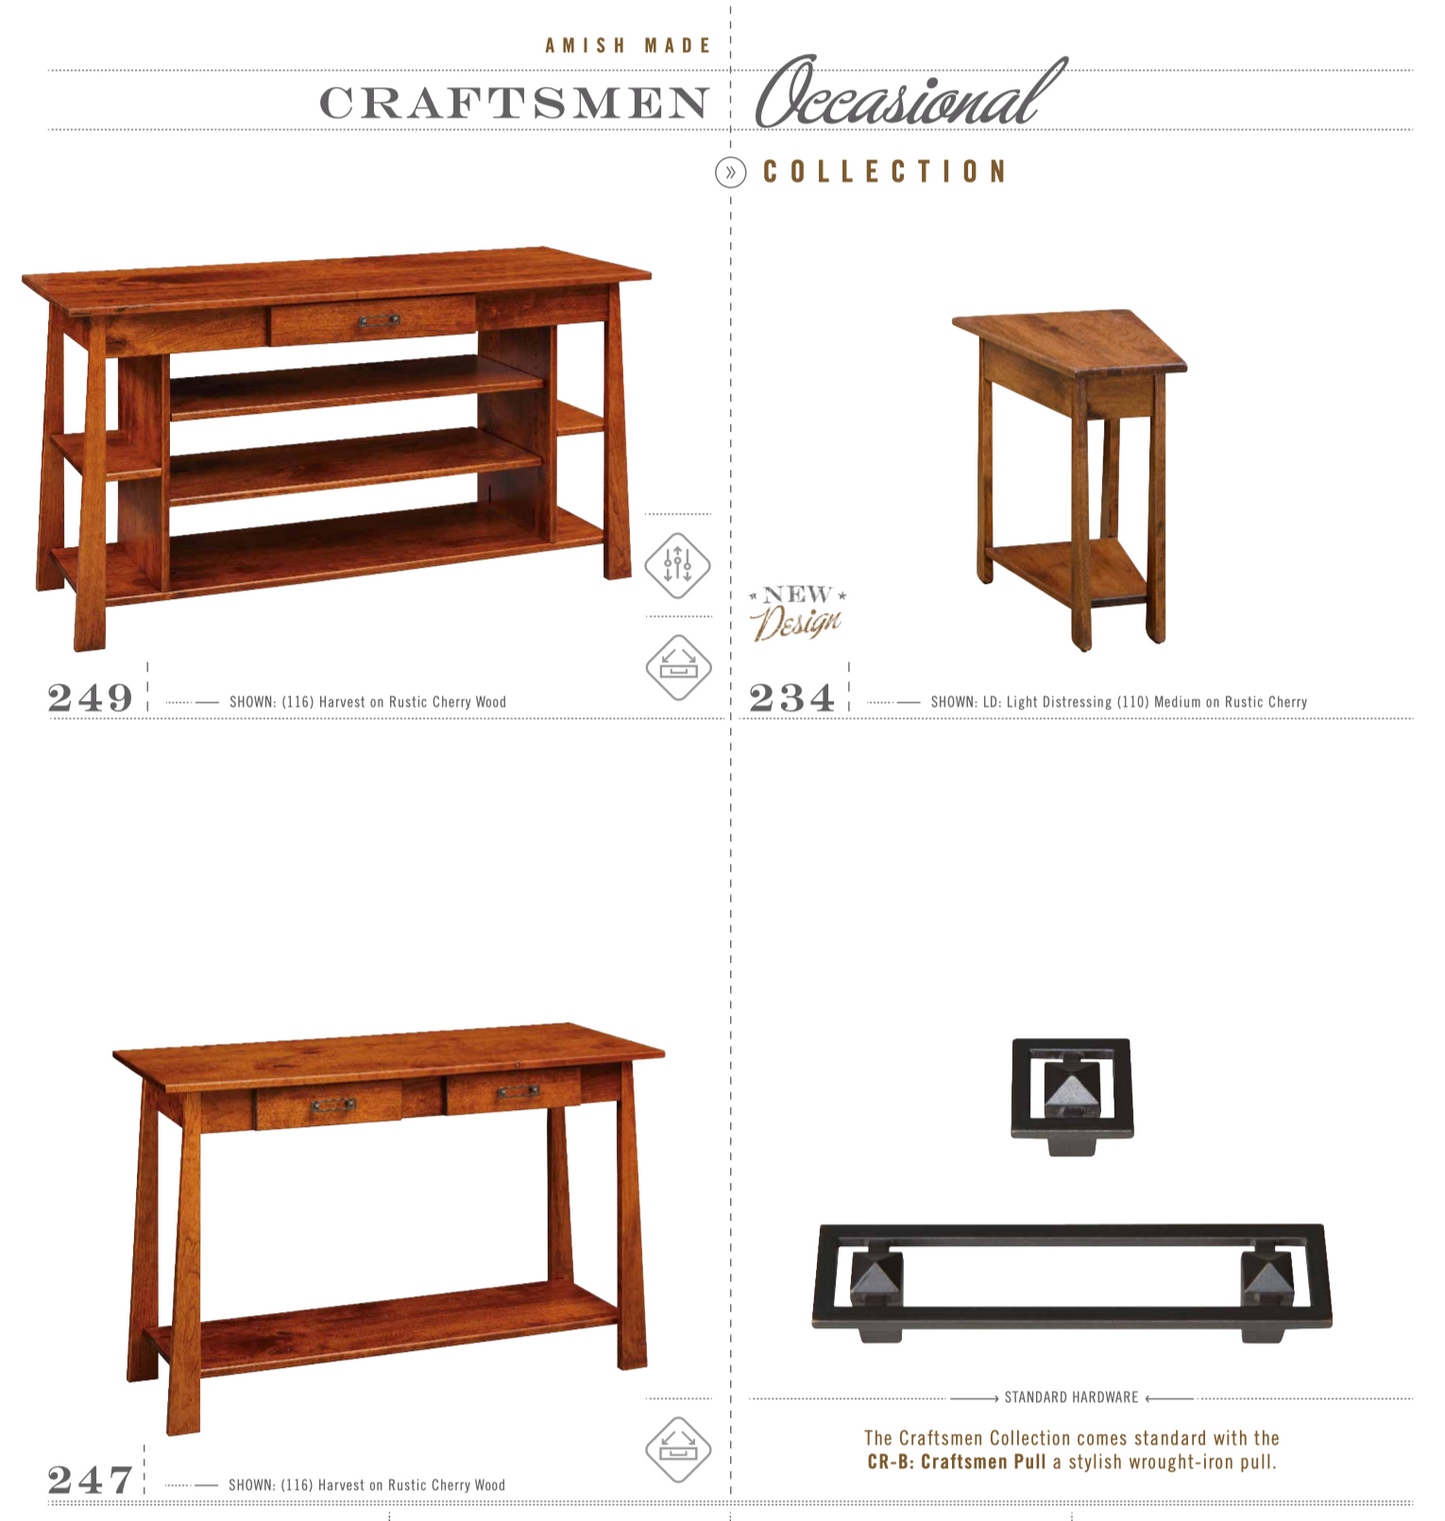 Craftsmen 46" Sofa Table